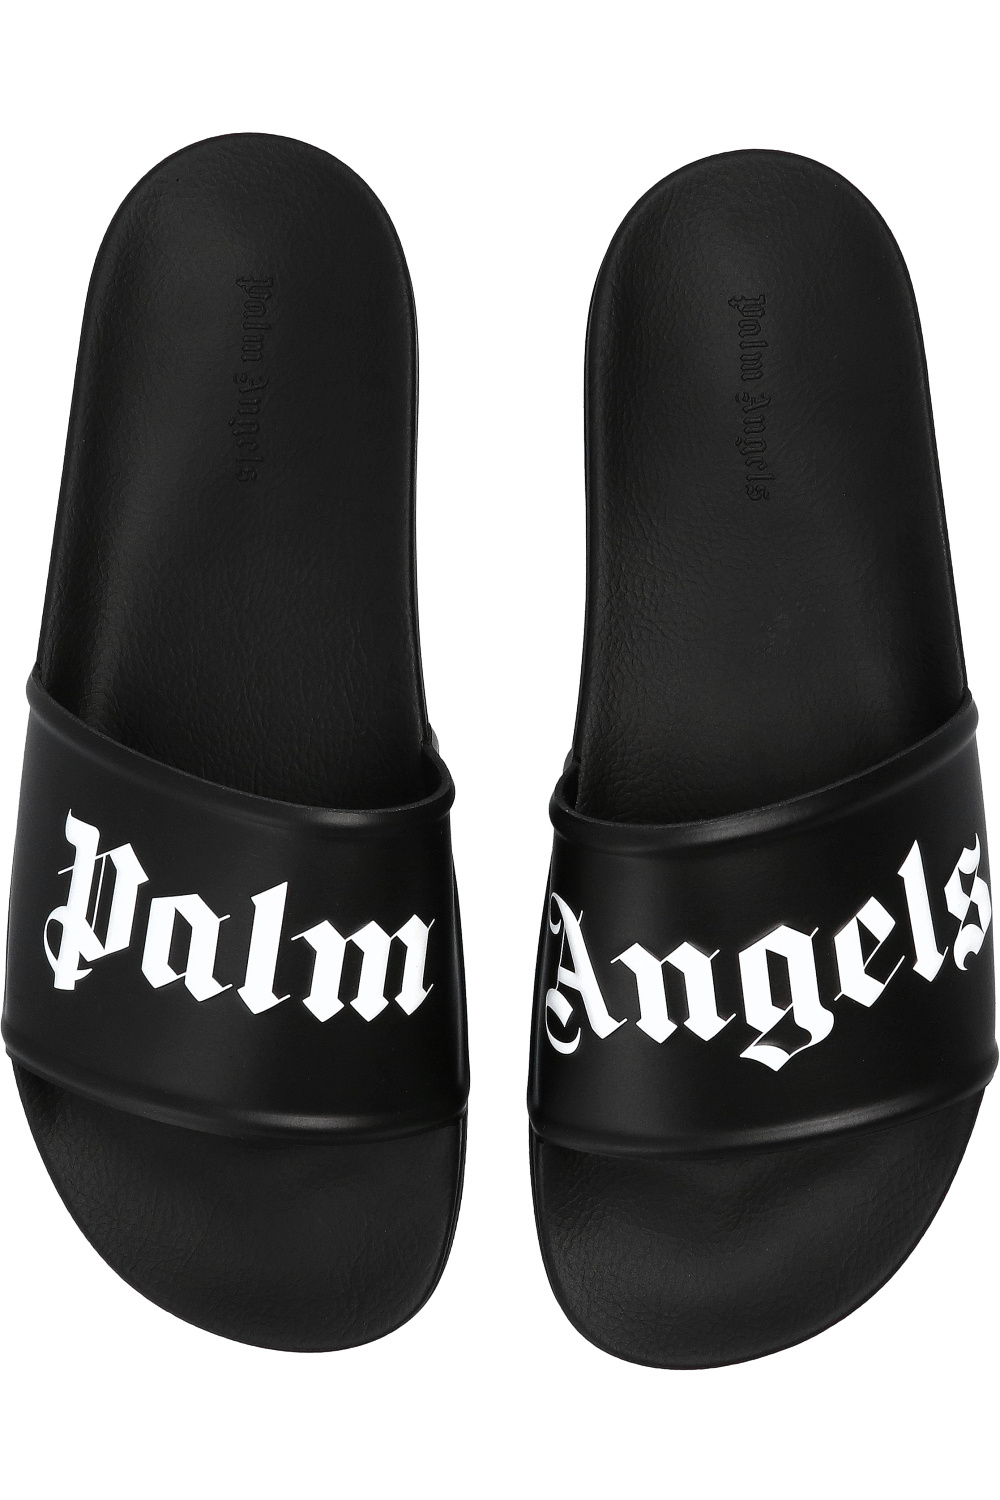 Palm Angels Slides with logo | Men's Shoes | Vitkac